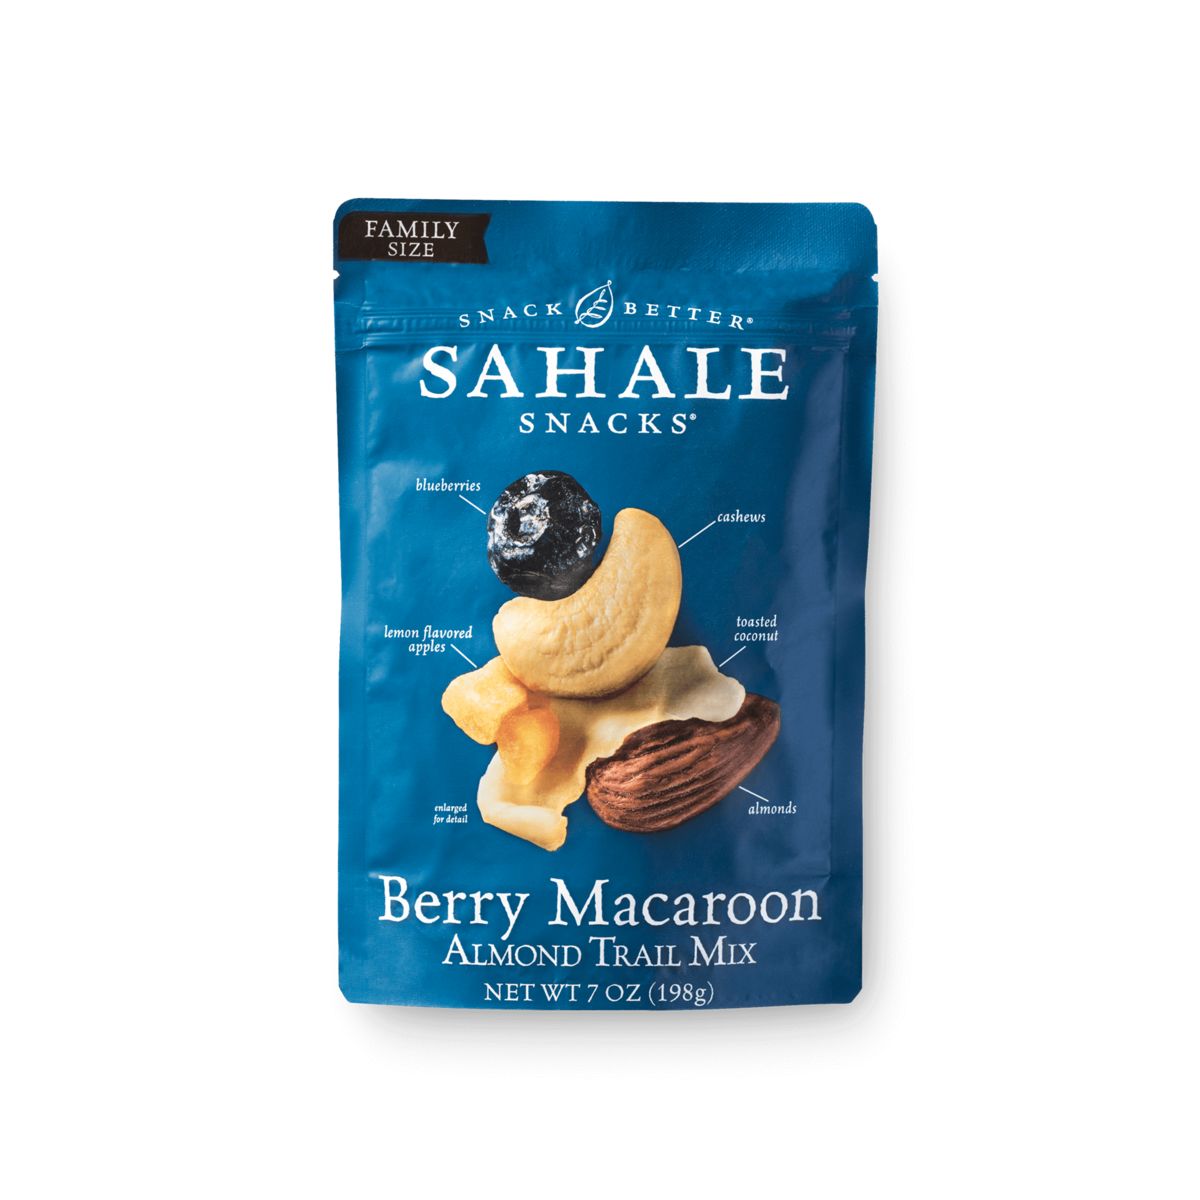 berry-macaroon-almond-trail-mix-or-sahale-snacks-r